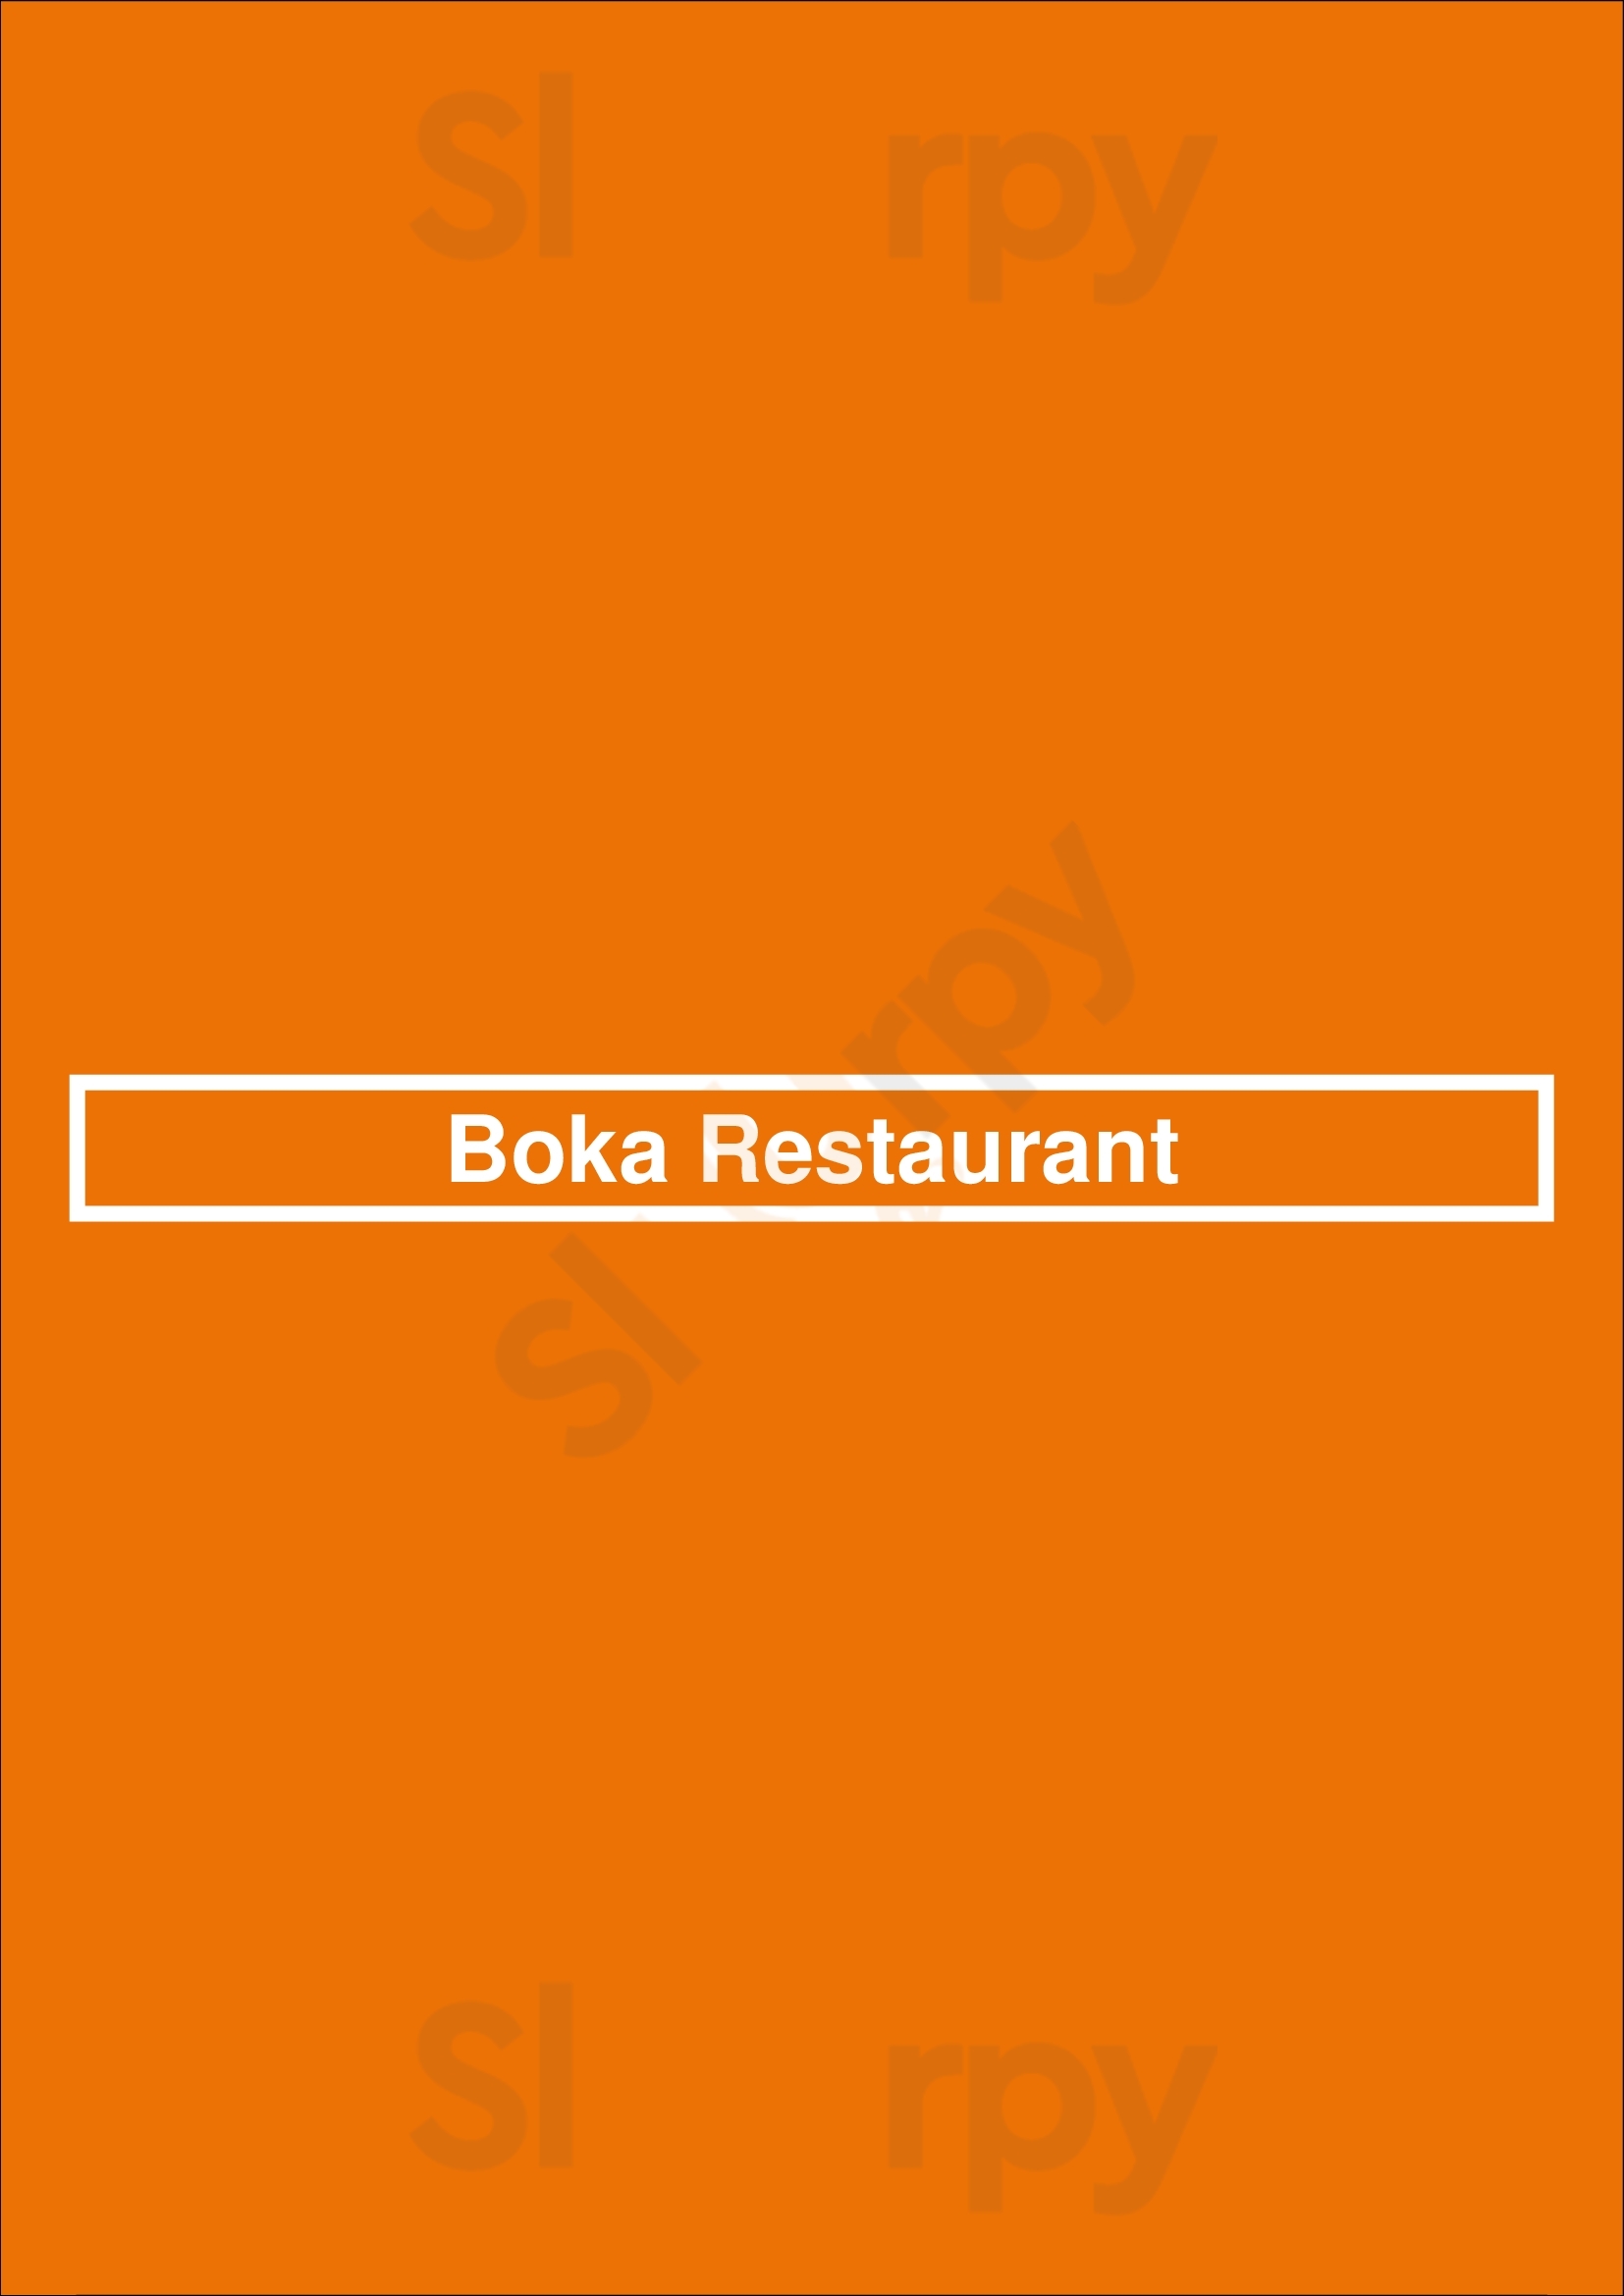 Boka Restaurant Chicago Menu - 1